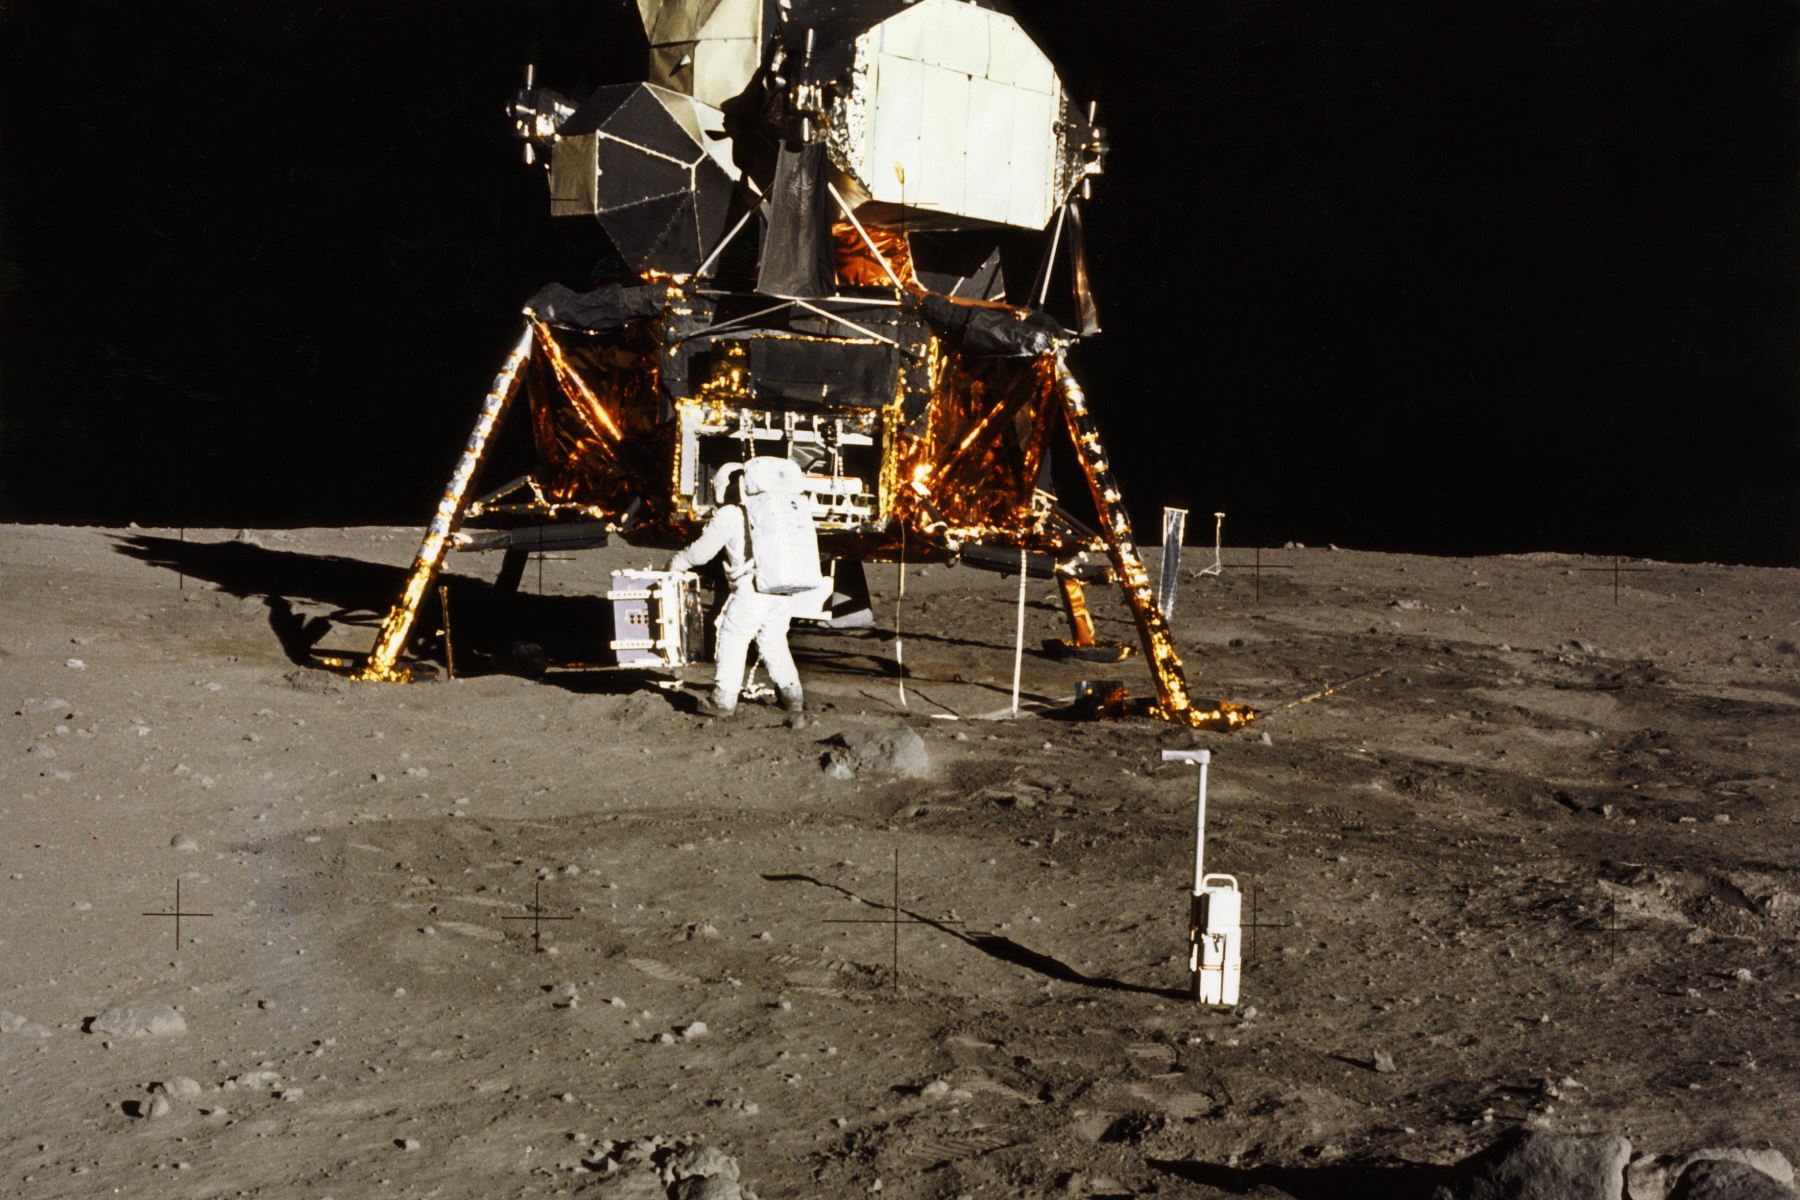 Imagen tomada por el astronauta Neil A. Armstrong del astronauta Edwin E. Aldrin cerca del Módulo Lunar del Apolo XI. Foto: AFP